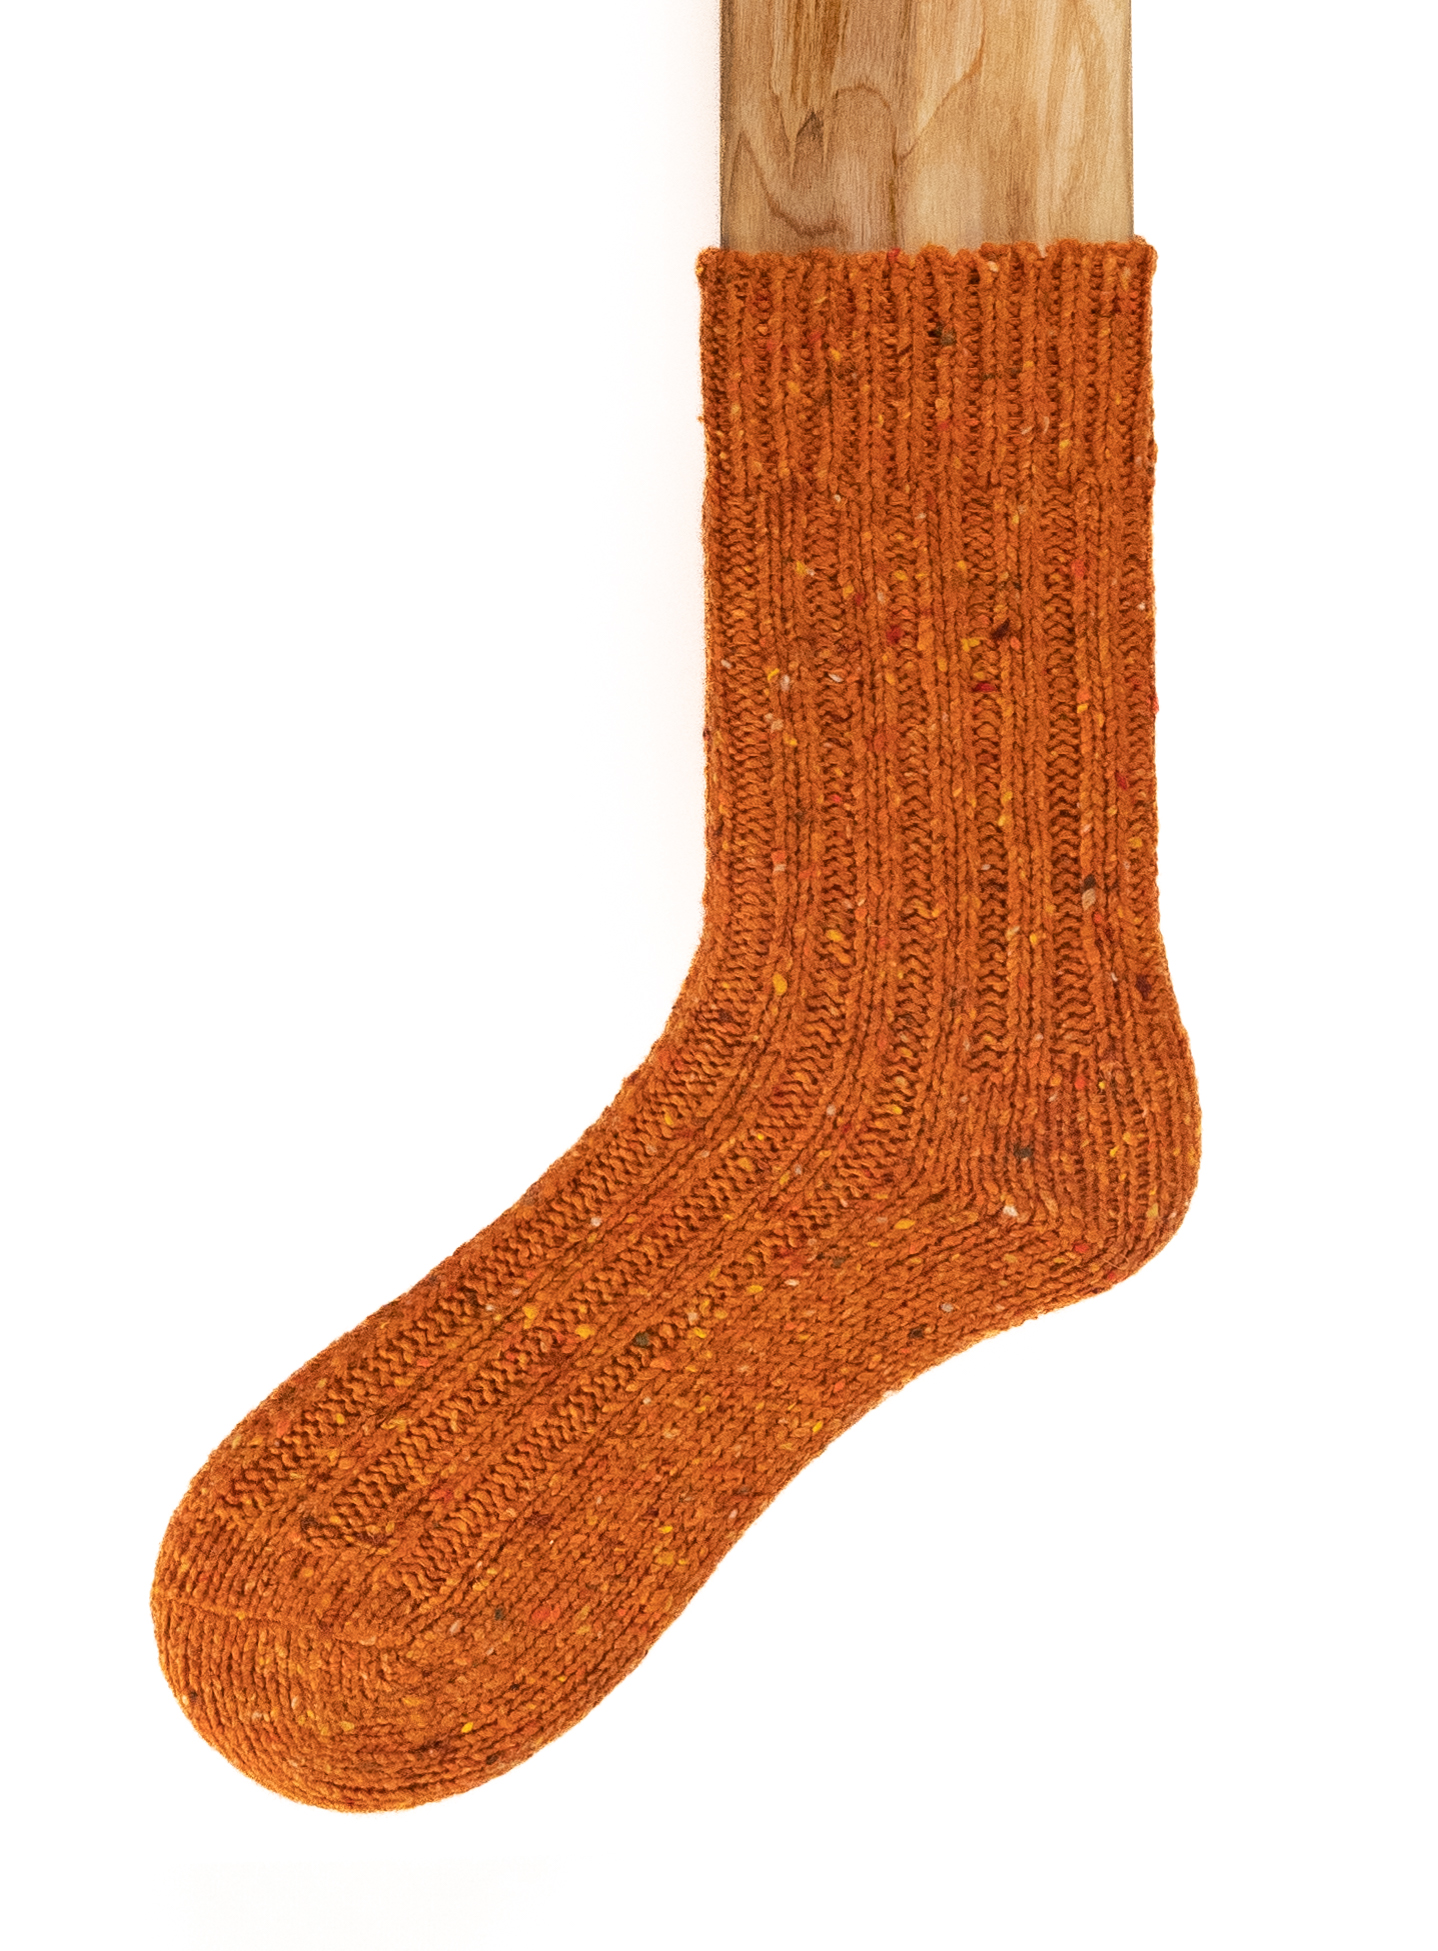 Connemara Socks - Wool Blend - Luxury Irish Gift - Flecks - F04-22 - Size EU 37-41